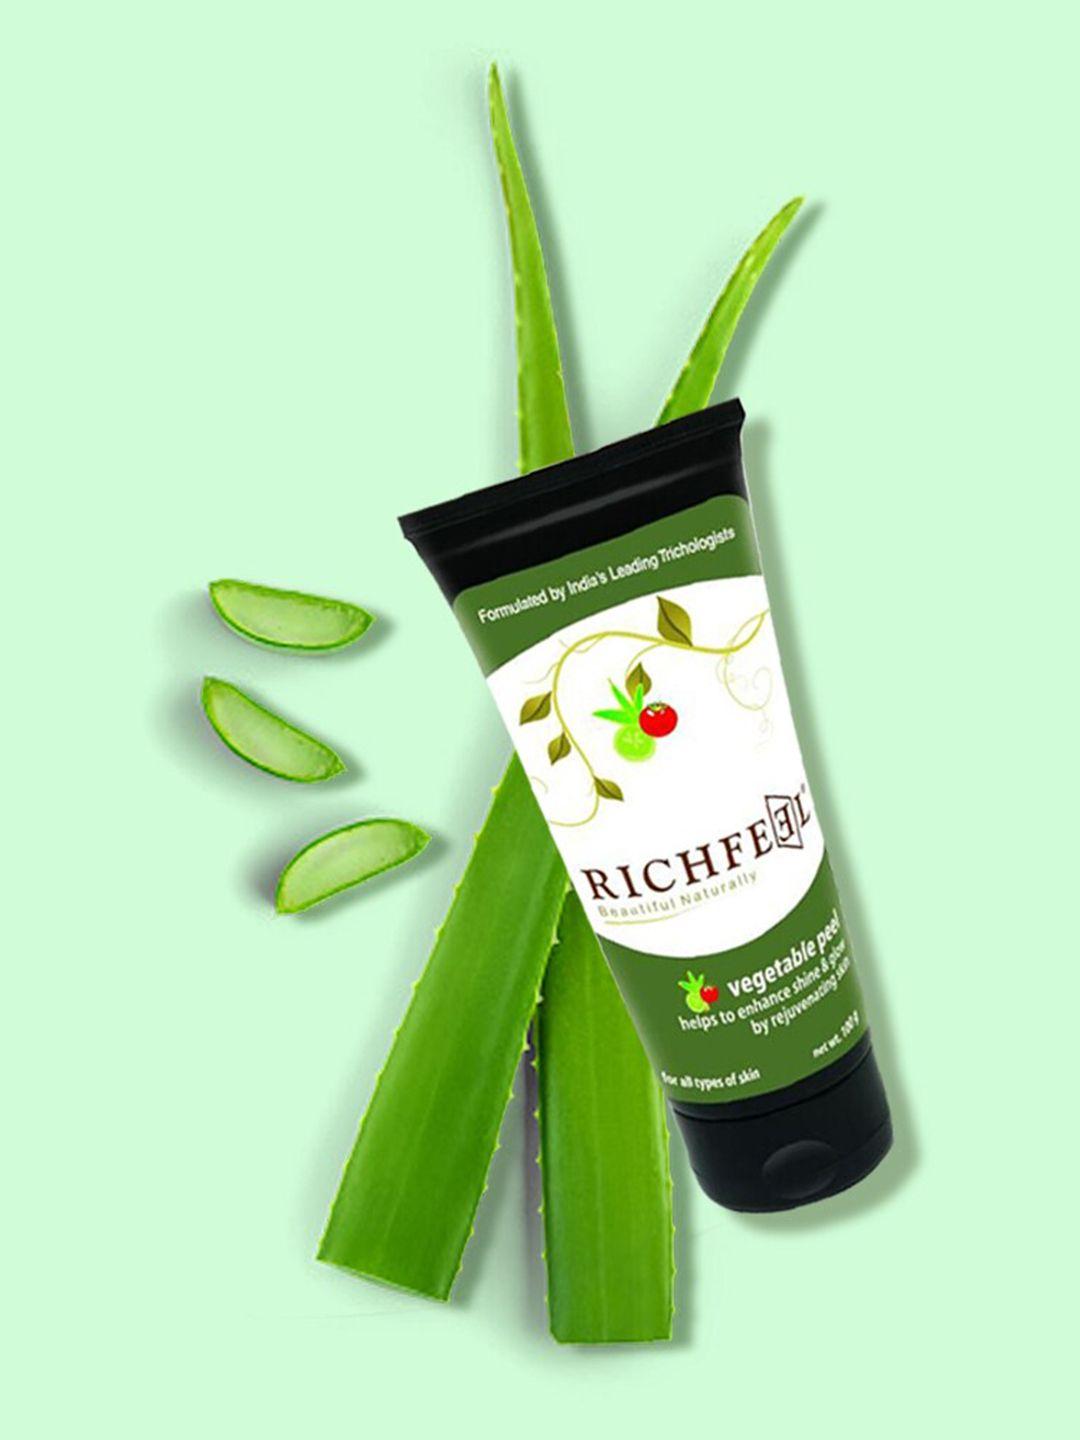 richfeel vegetable peel pack with aloe vera for all skin types - 100g